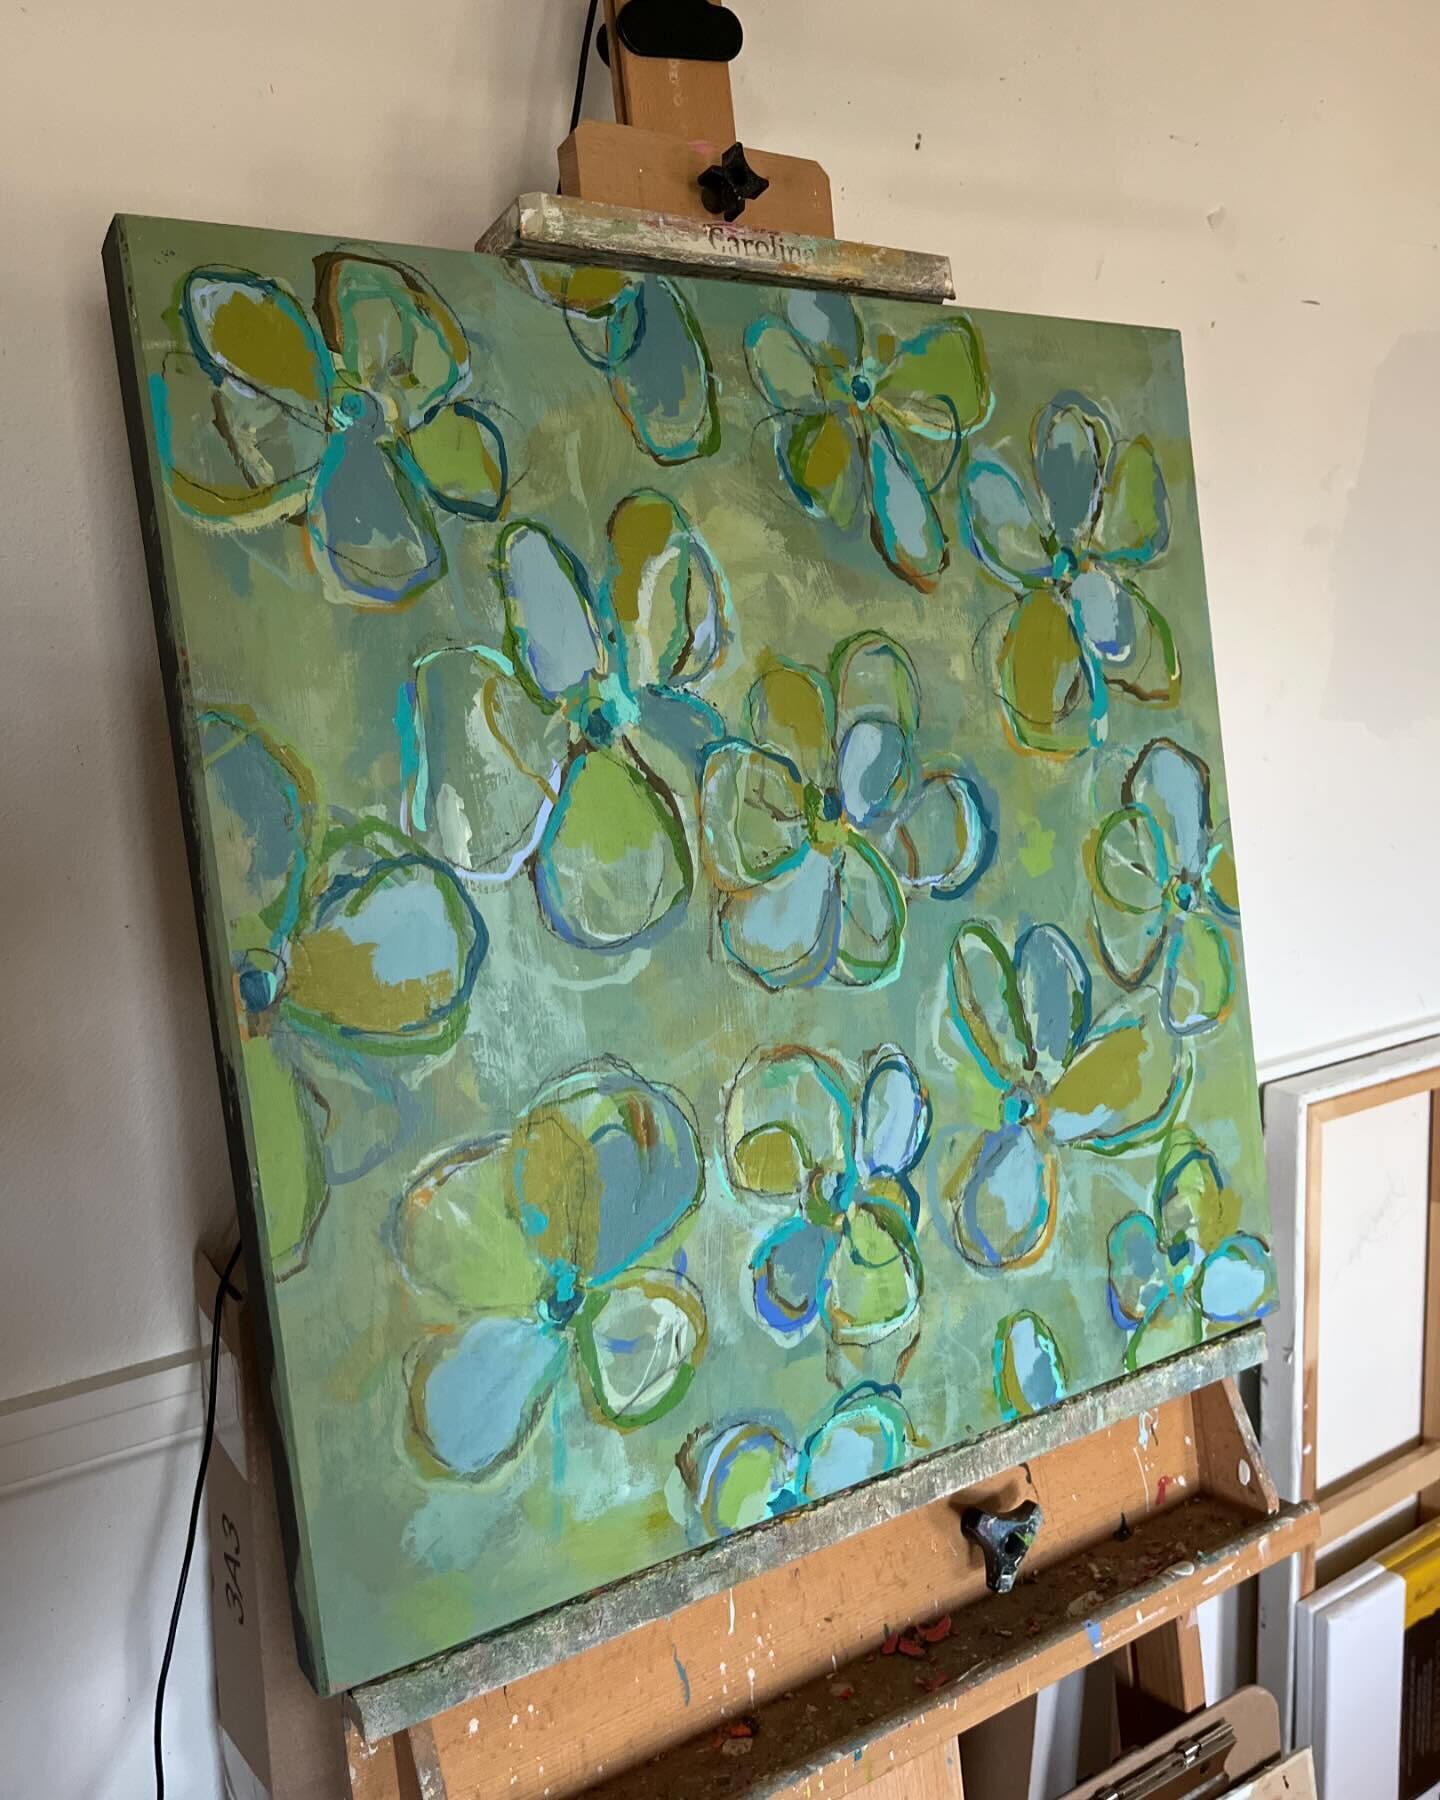 New work in progress! I&rsquo;m pretty pleased with this one!!
#abstractflowers #newpainting #wip #moodyart #acrylic #wallart #blueart #greenart #homedecor #livingroomdecor #bedroomdecor #squarepainting